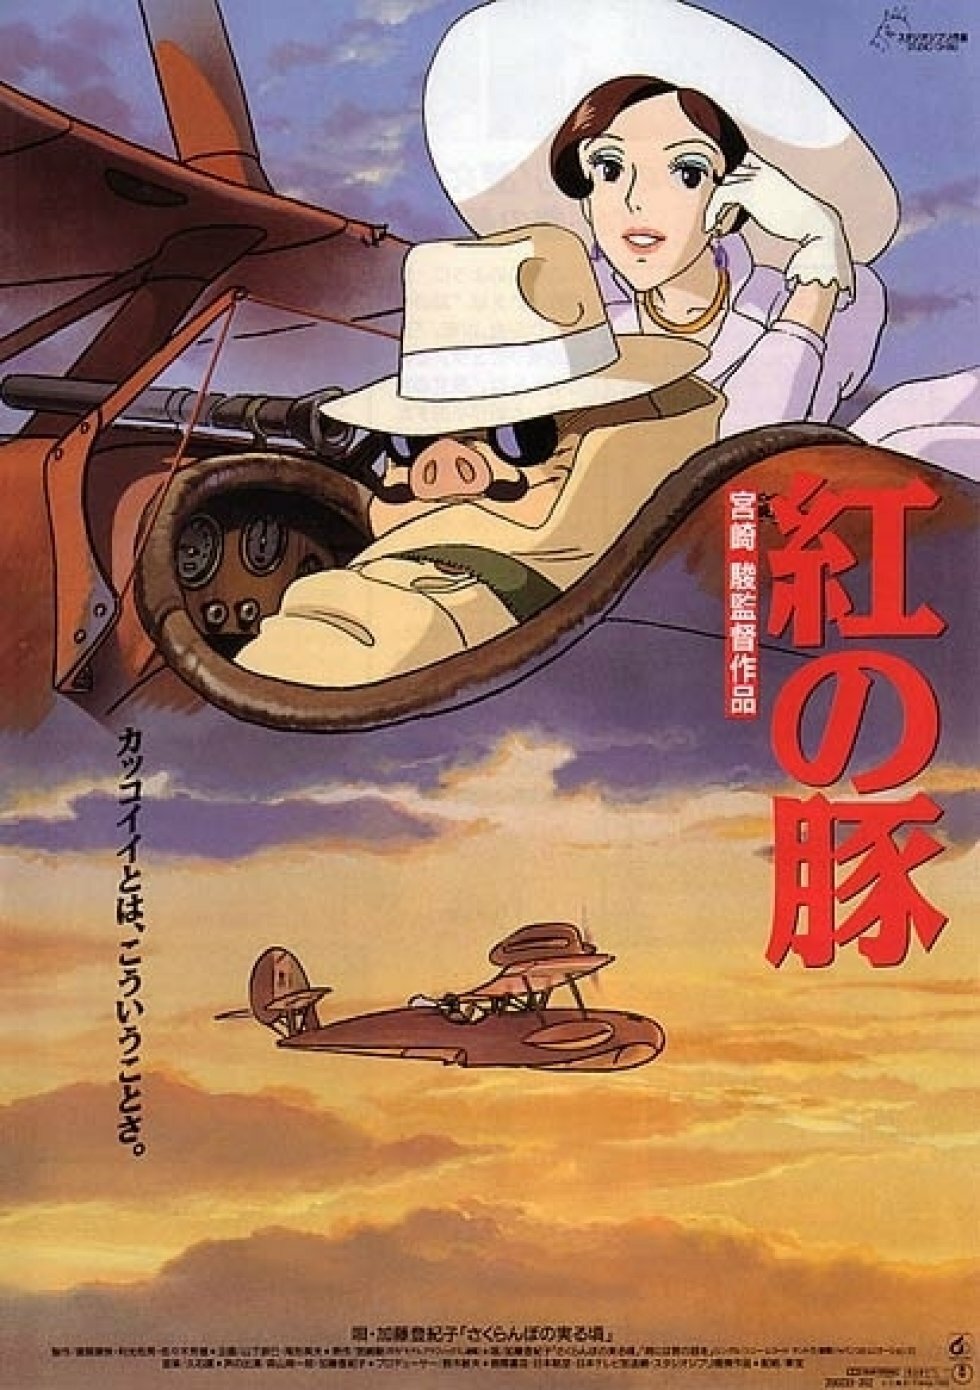 Porco Rosso - Studio Ghibli - Hayao Miyazaki